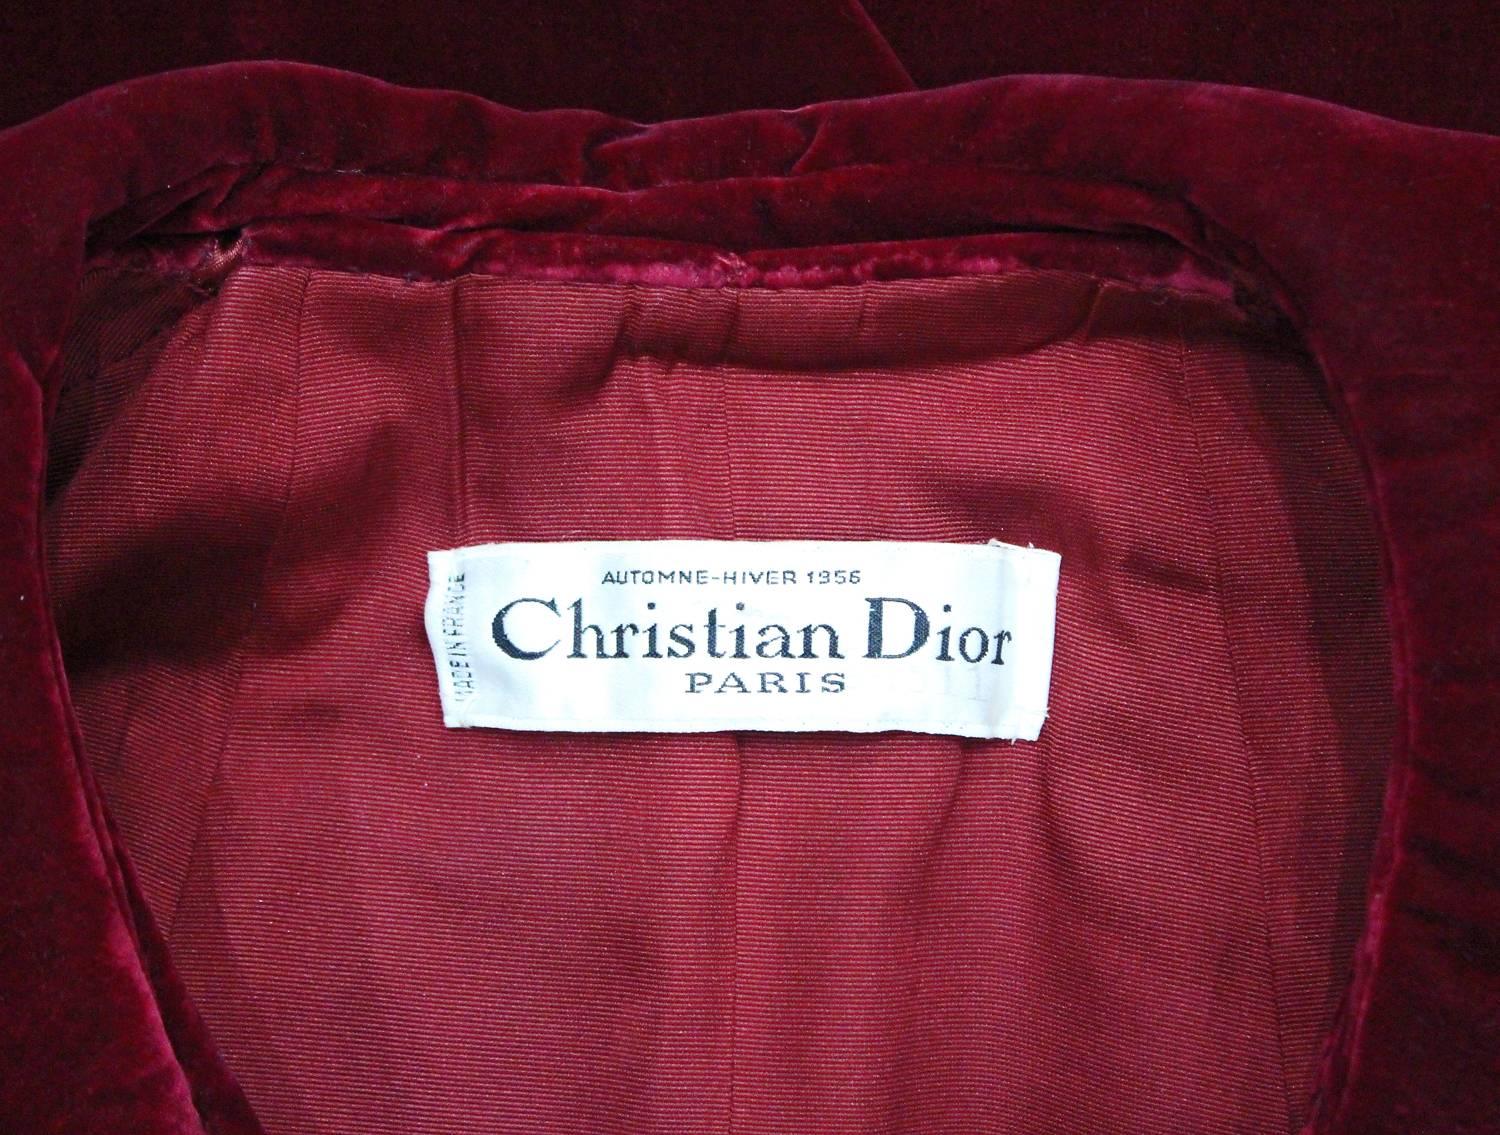 Christian Dior Haute Couture silk velvet opera coat, Autumn/Winter 1956 2